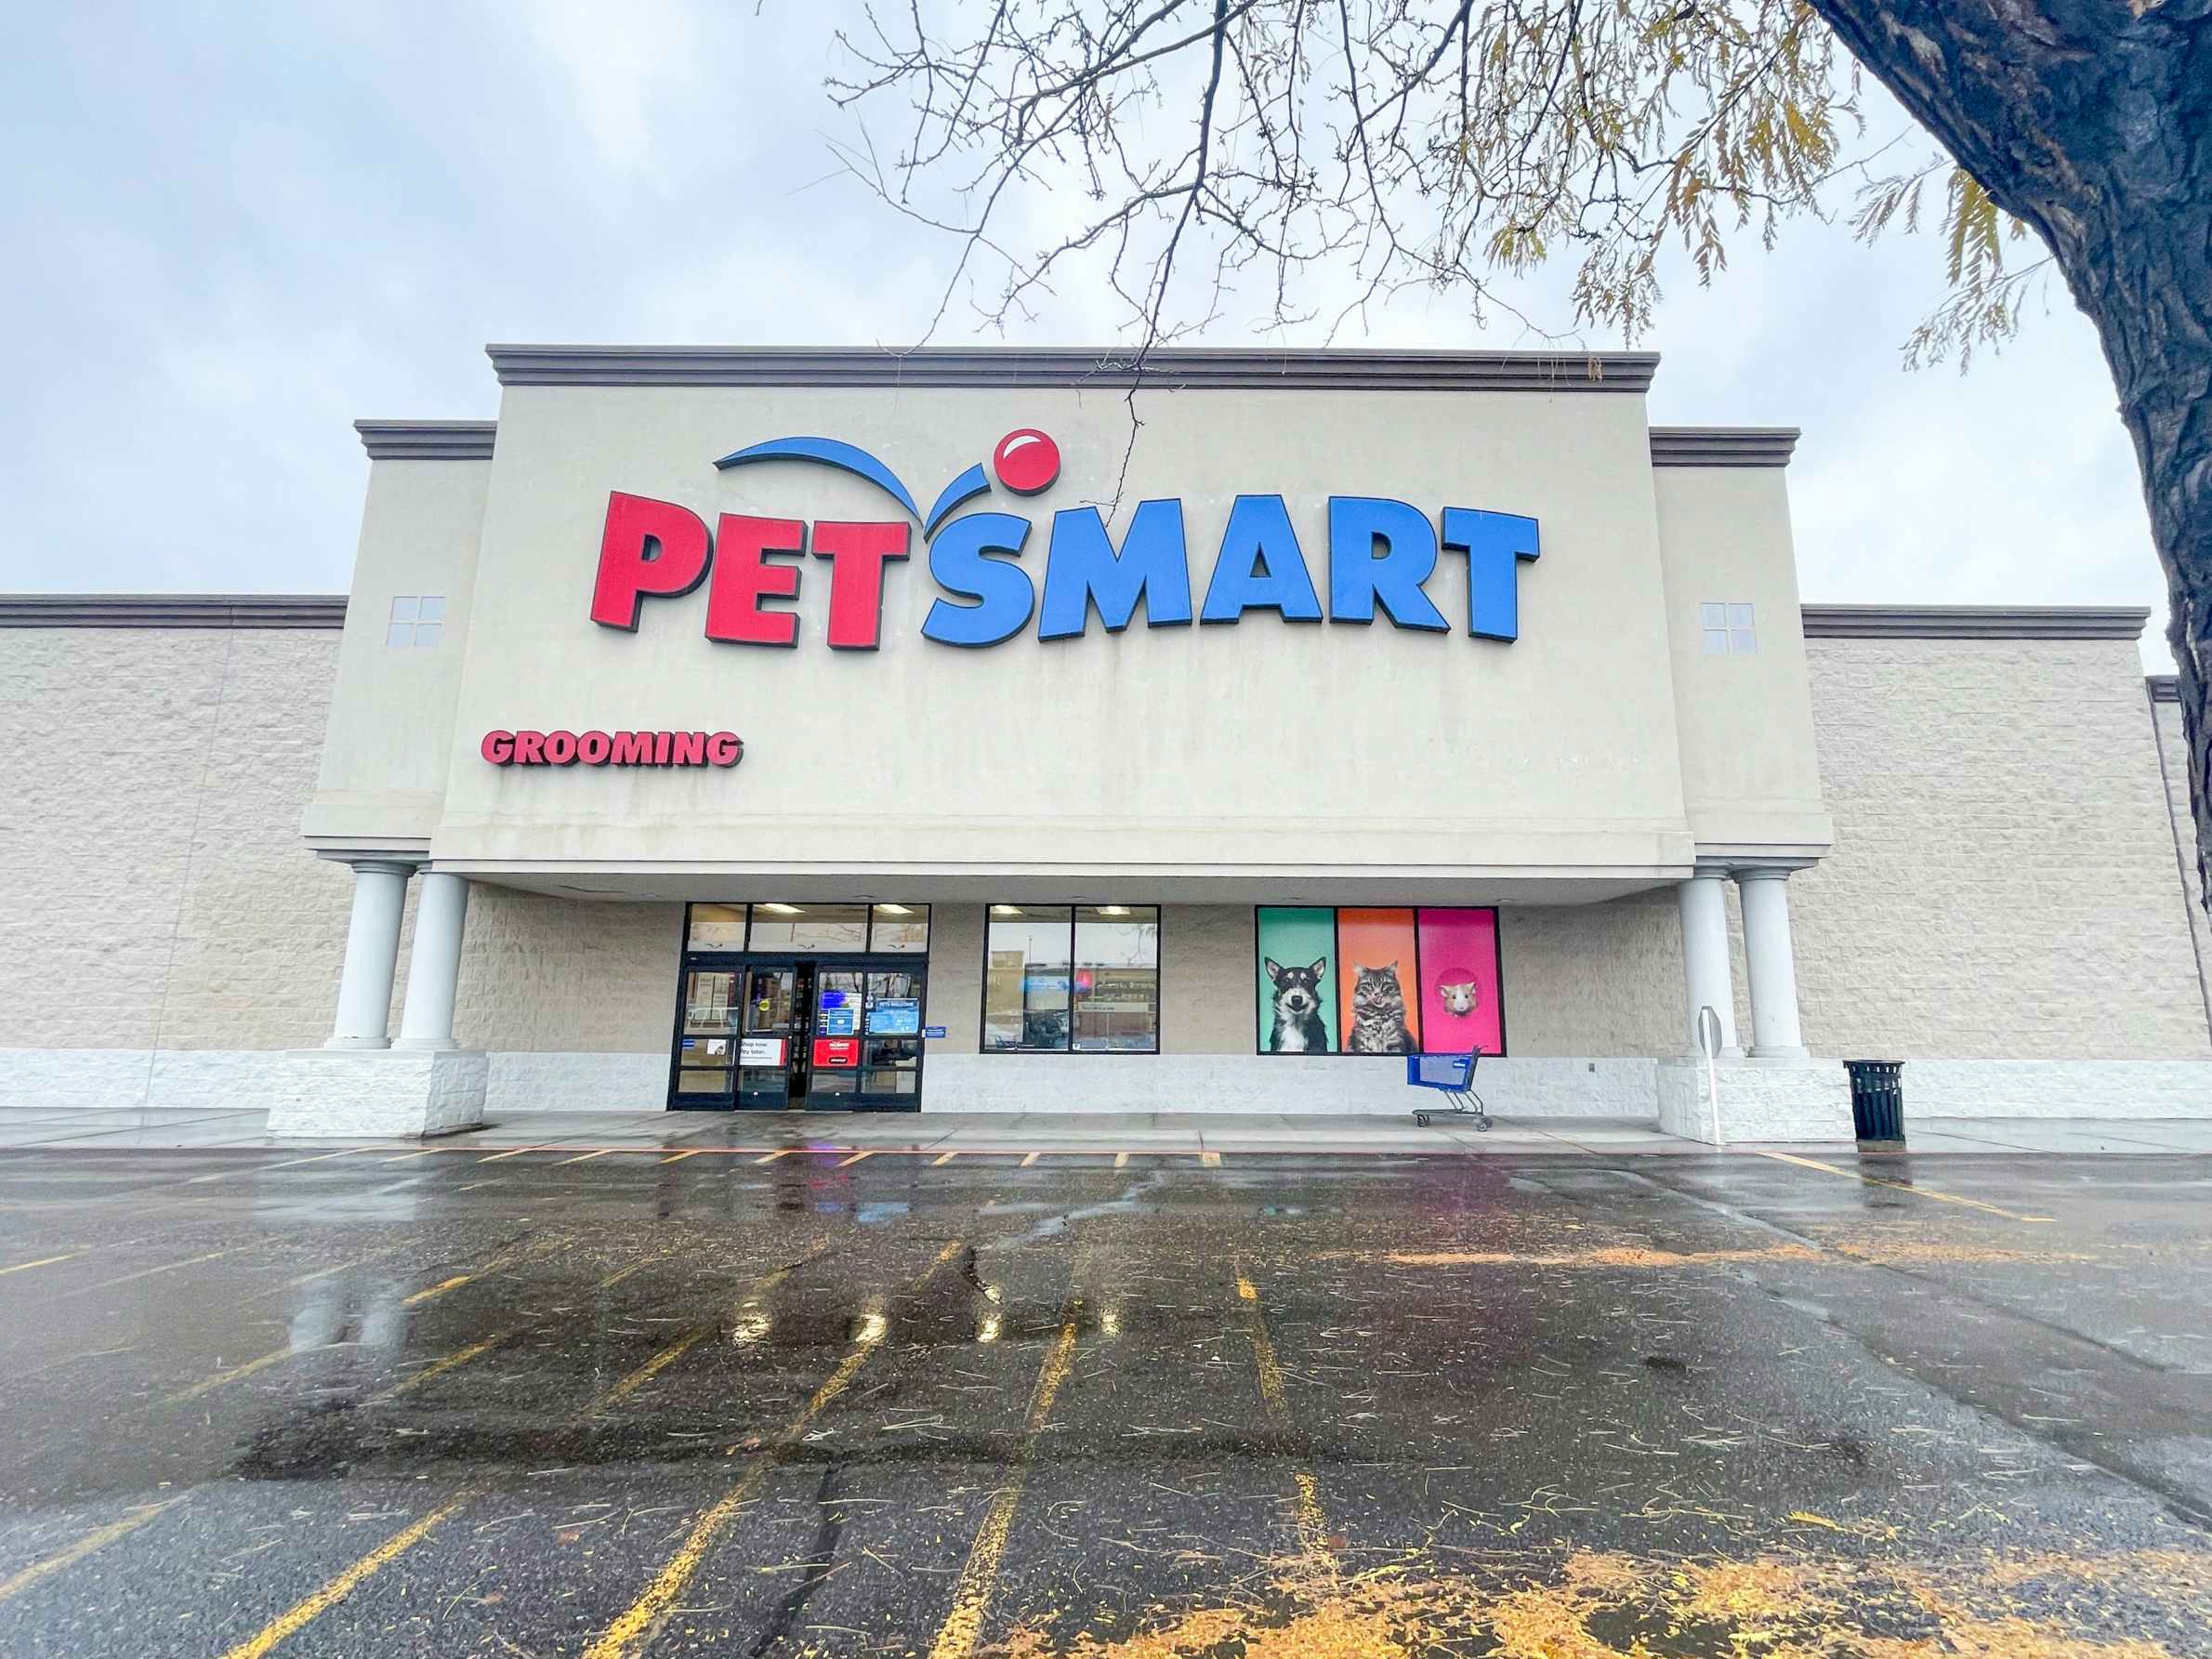 A Petsmart store front.